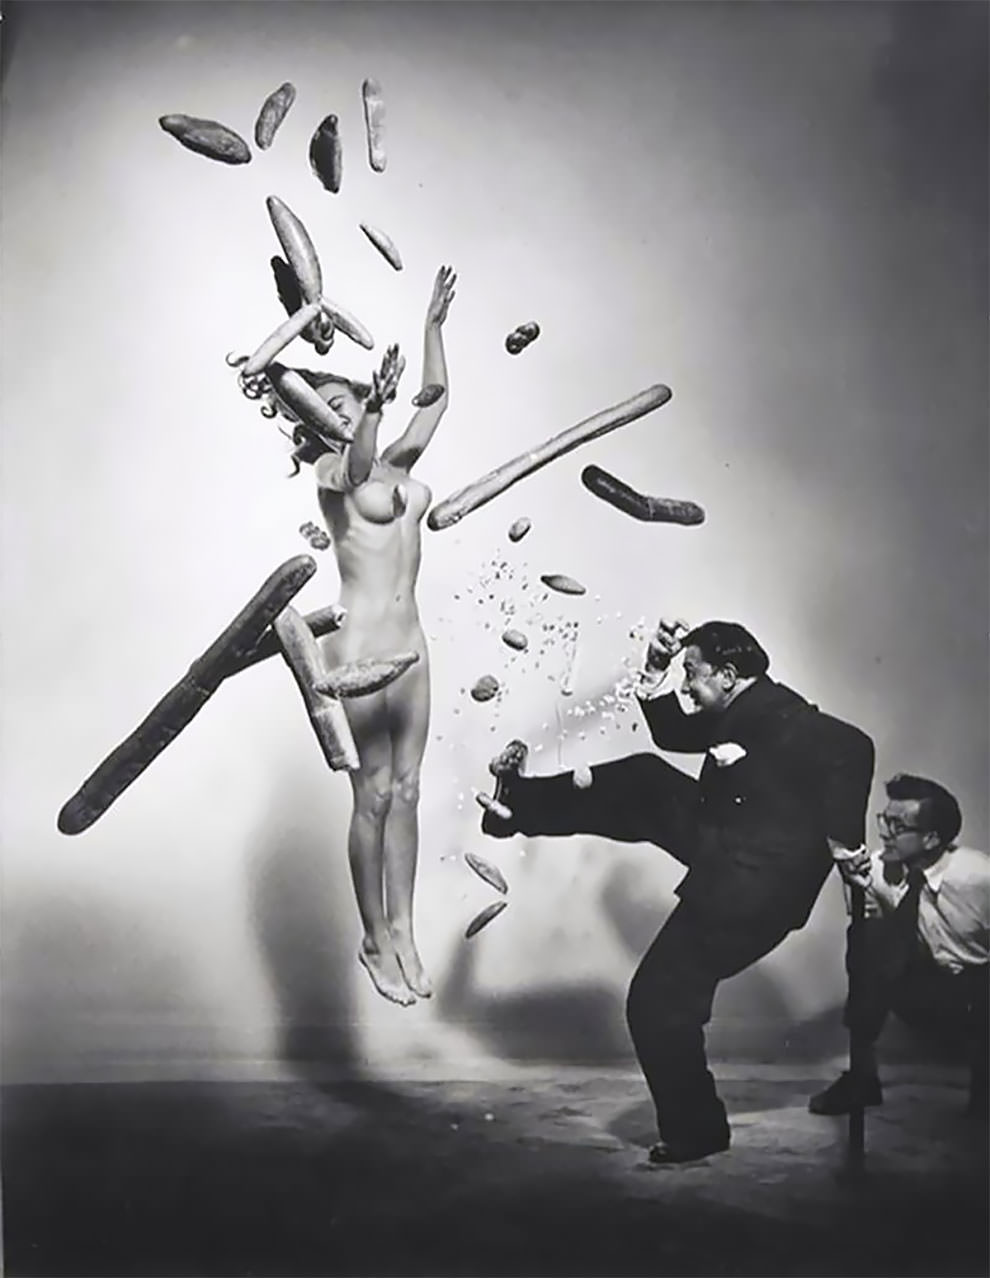 Spanish Surrealist Painter Salvador Dali. USA, New York City, 1951.